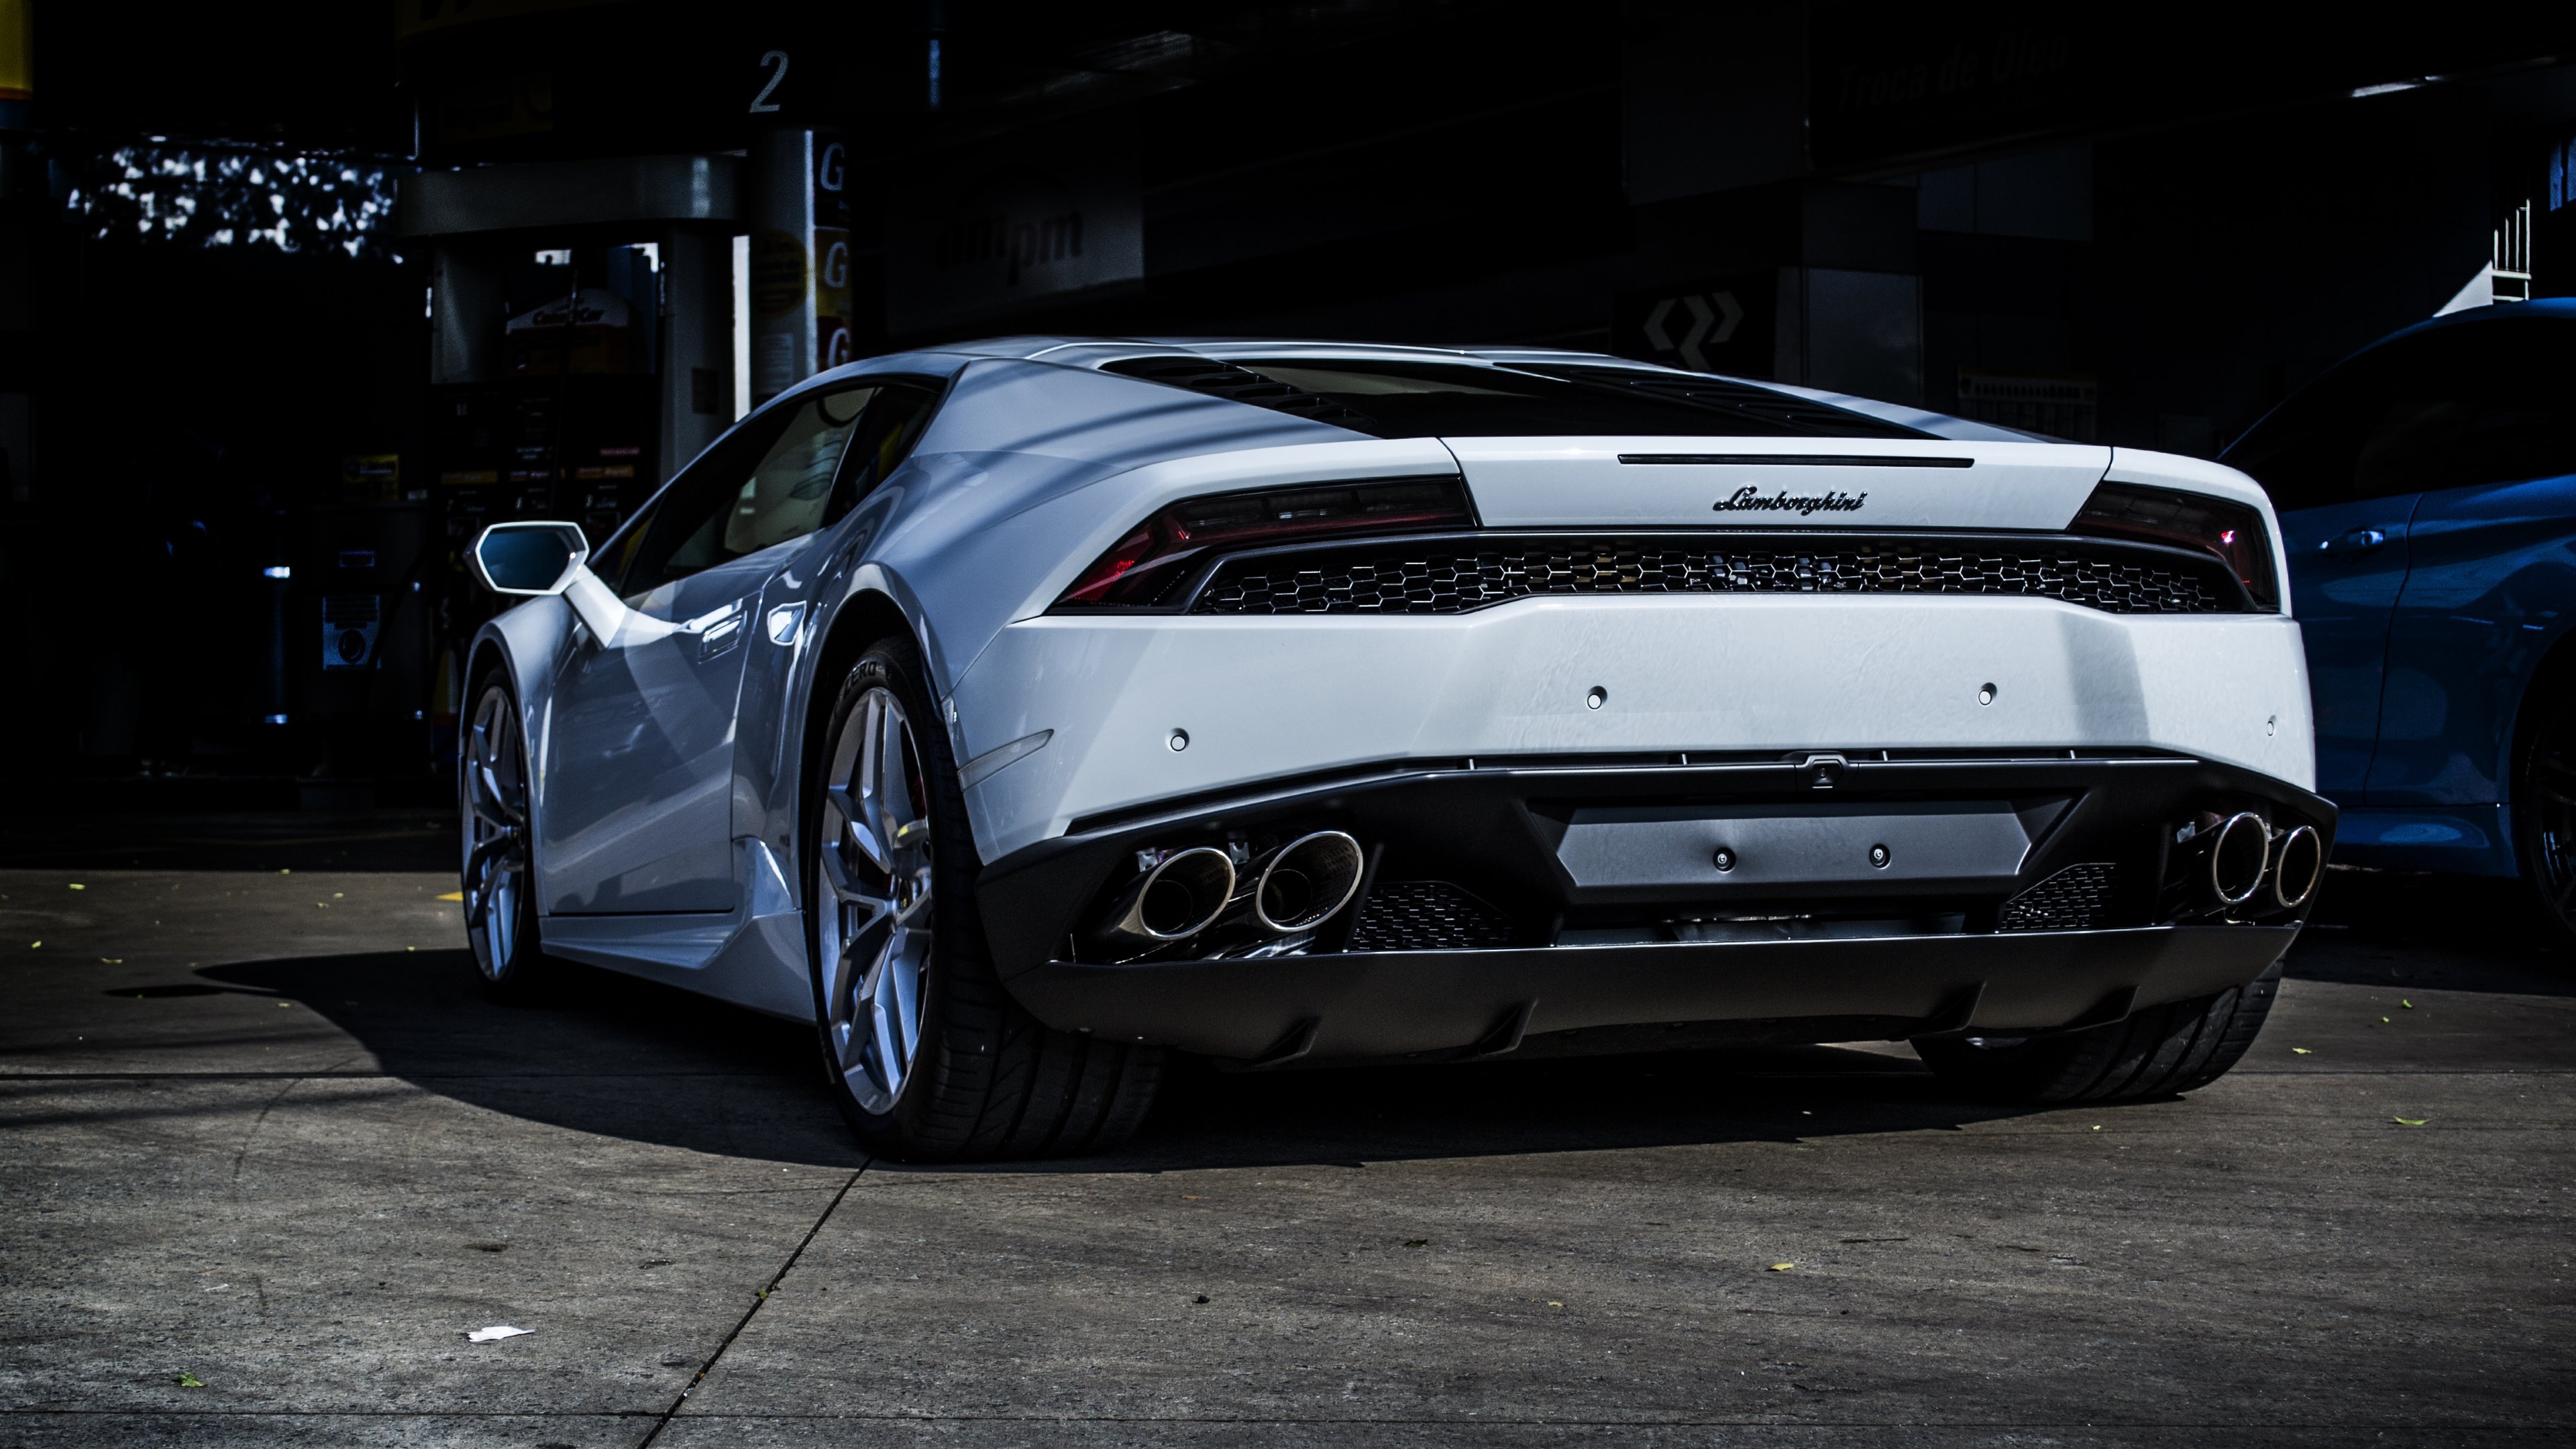 Lamborghini Huracan, 4K wallpaper, Cool and classy, High-definition visuals, 3840x2160 4K Desktop